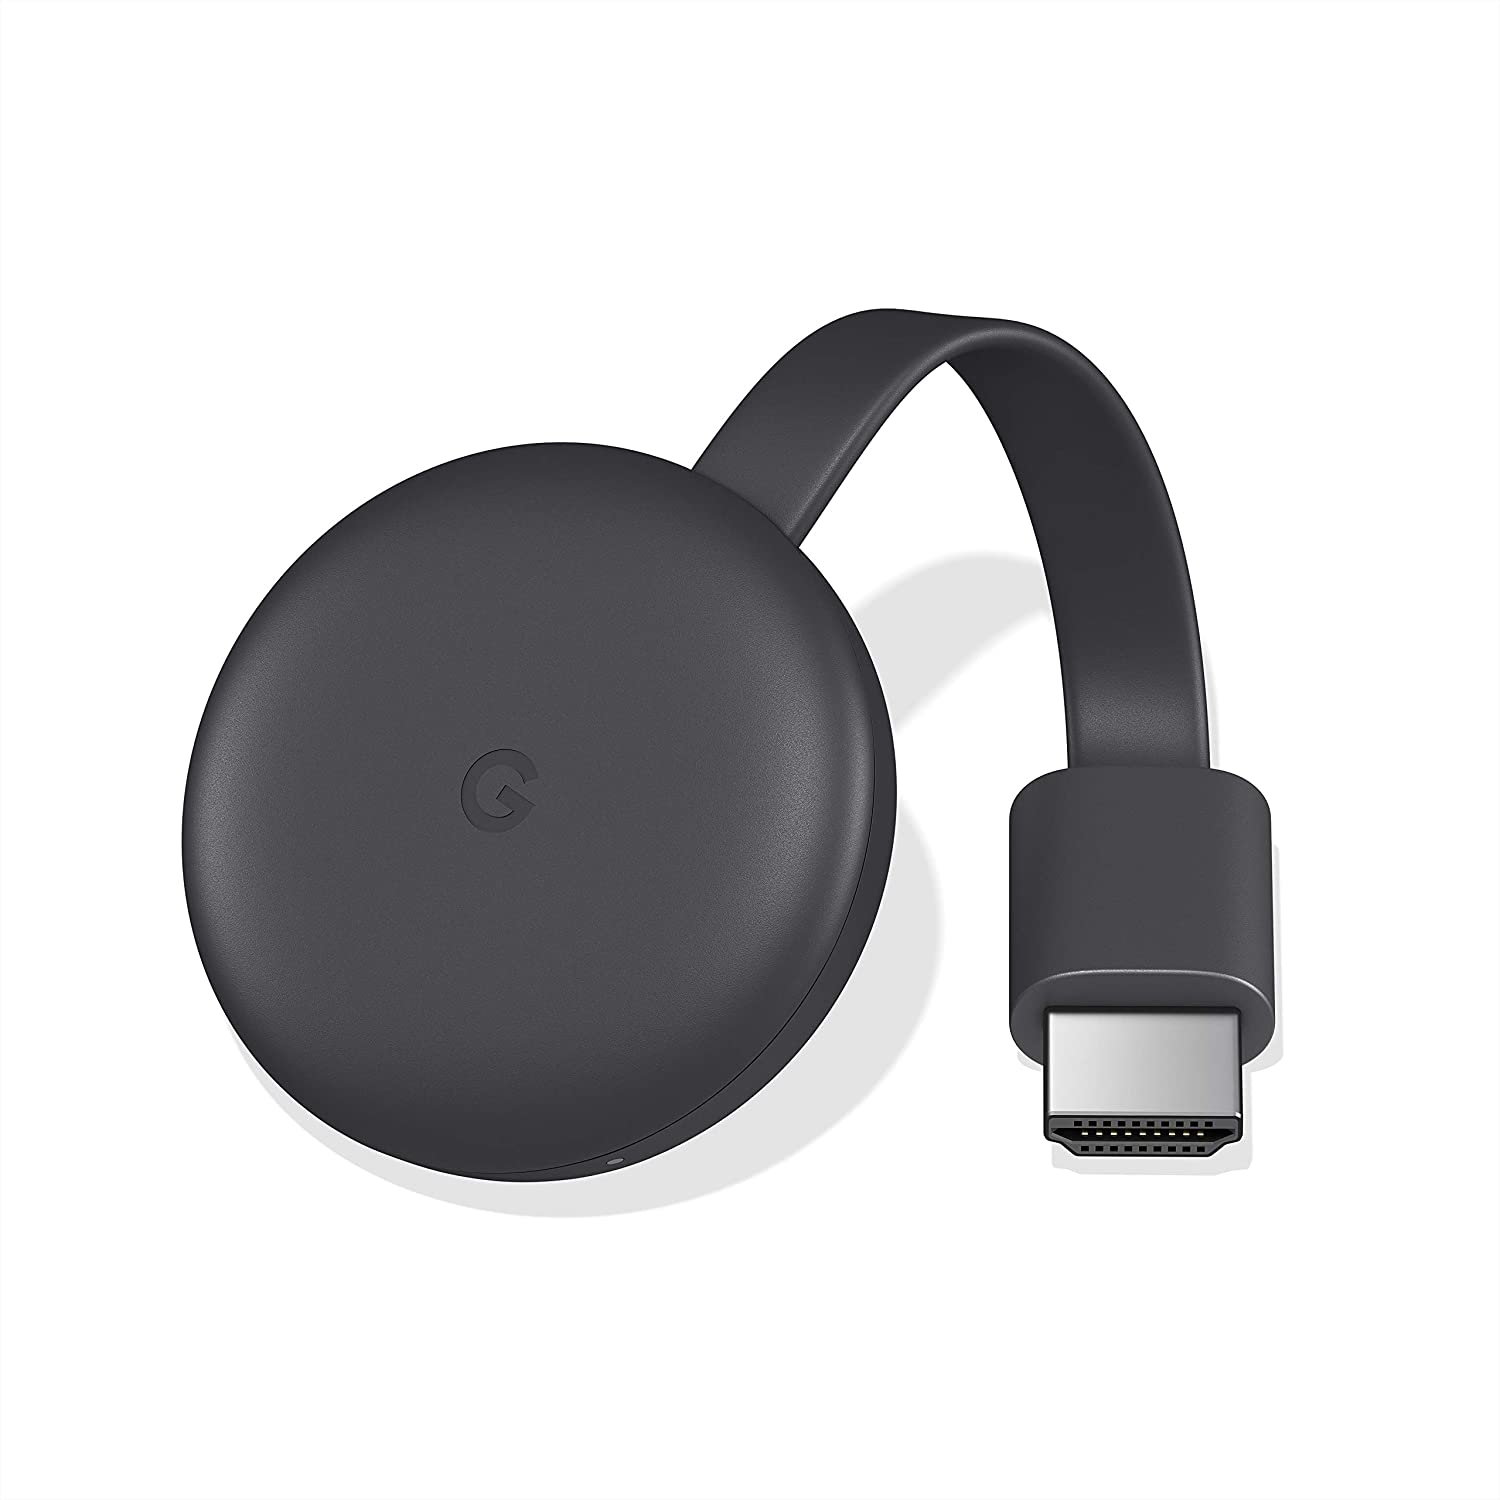 Google 3rd Generation Streaming Media Player Chromecast